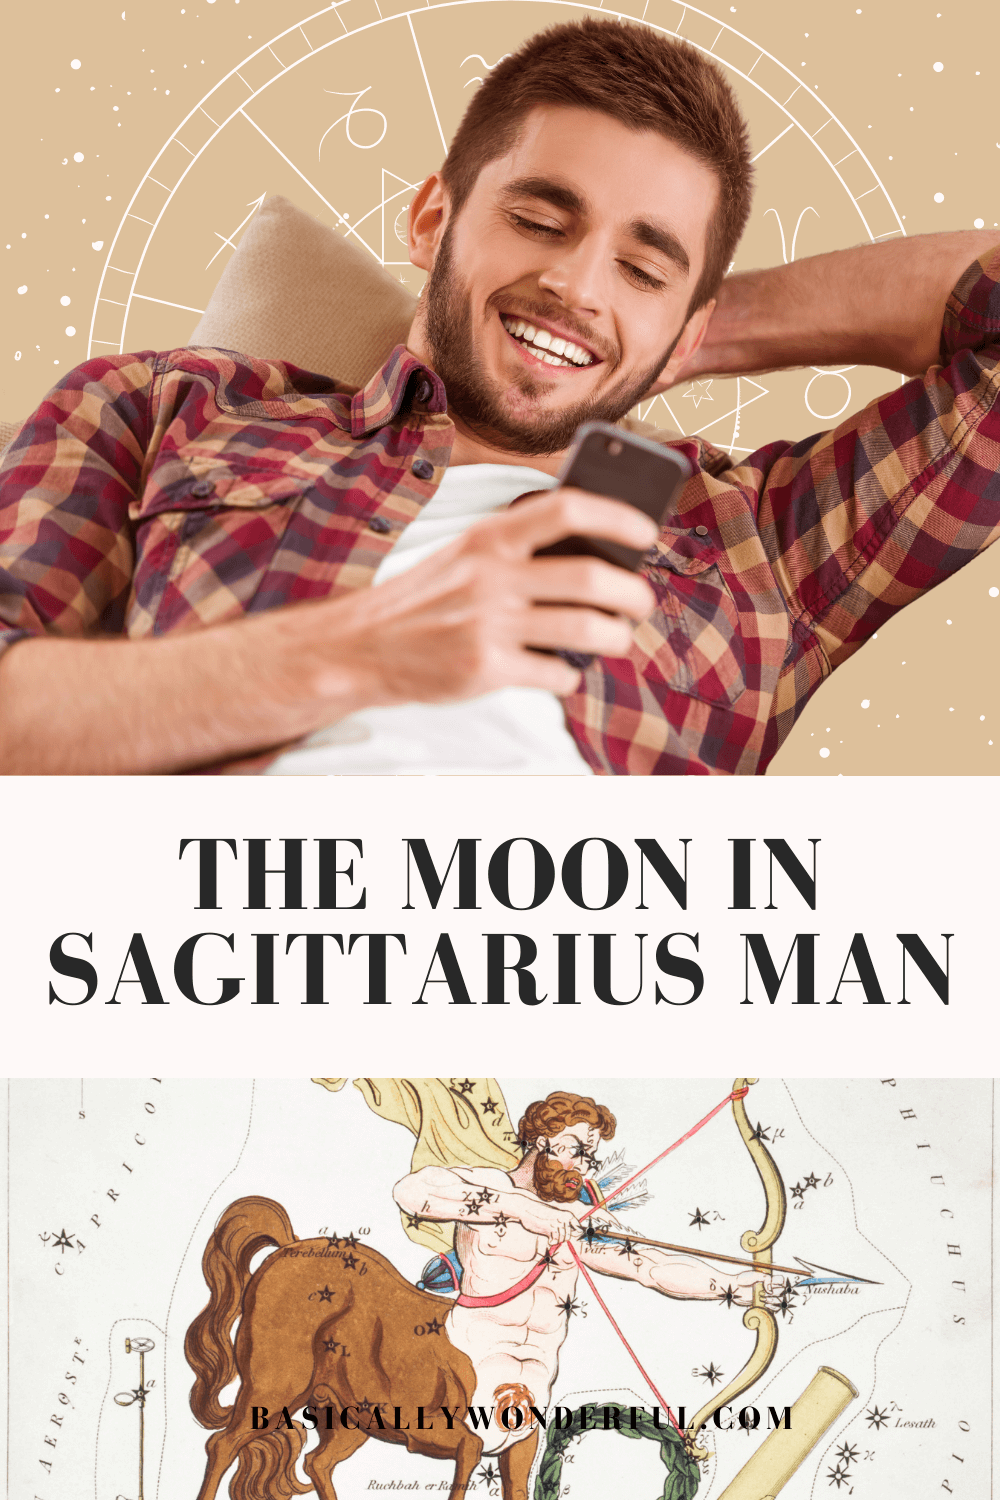 Sagittarius Man Traits